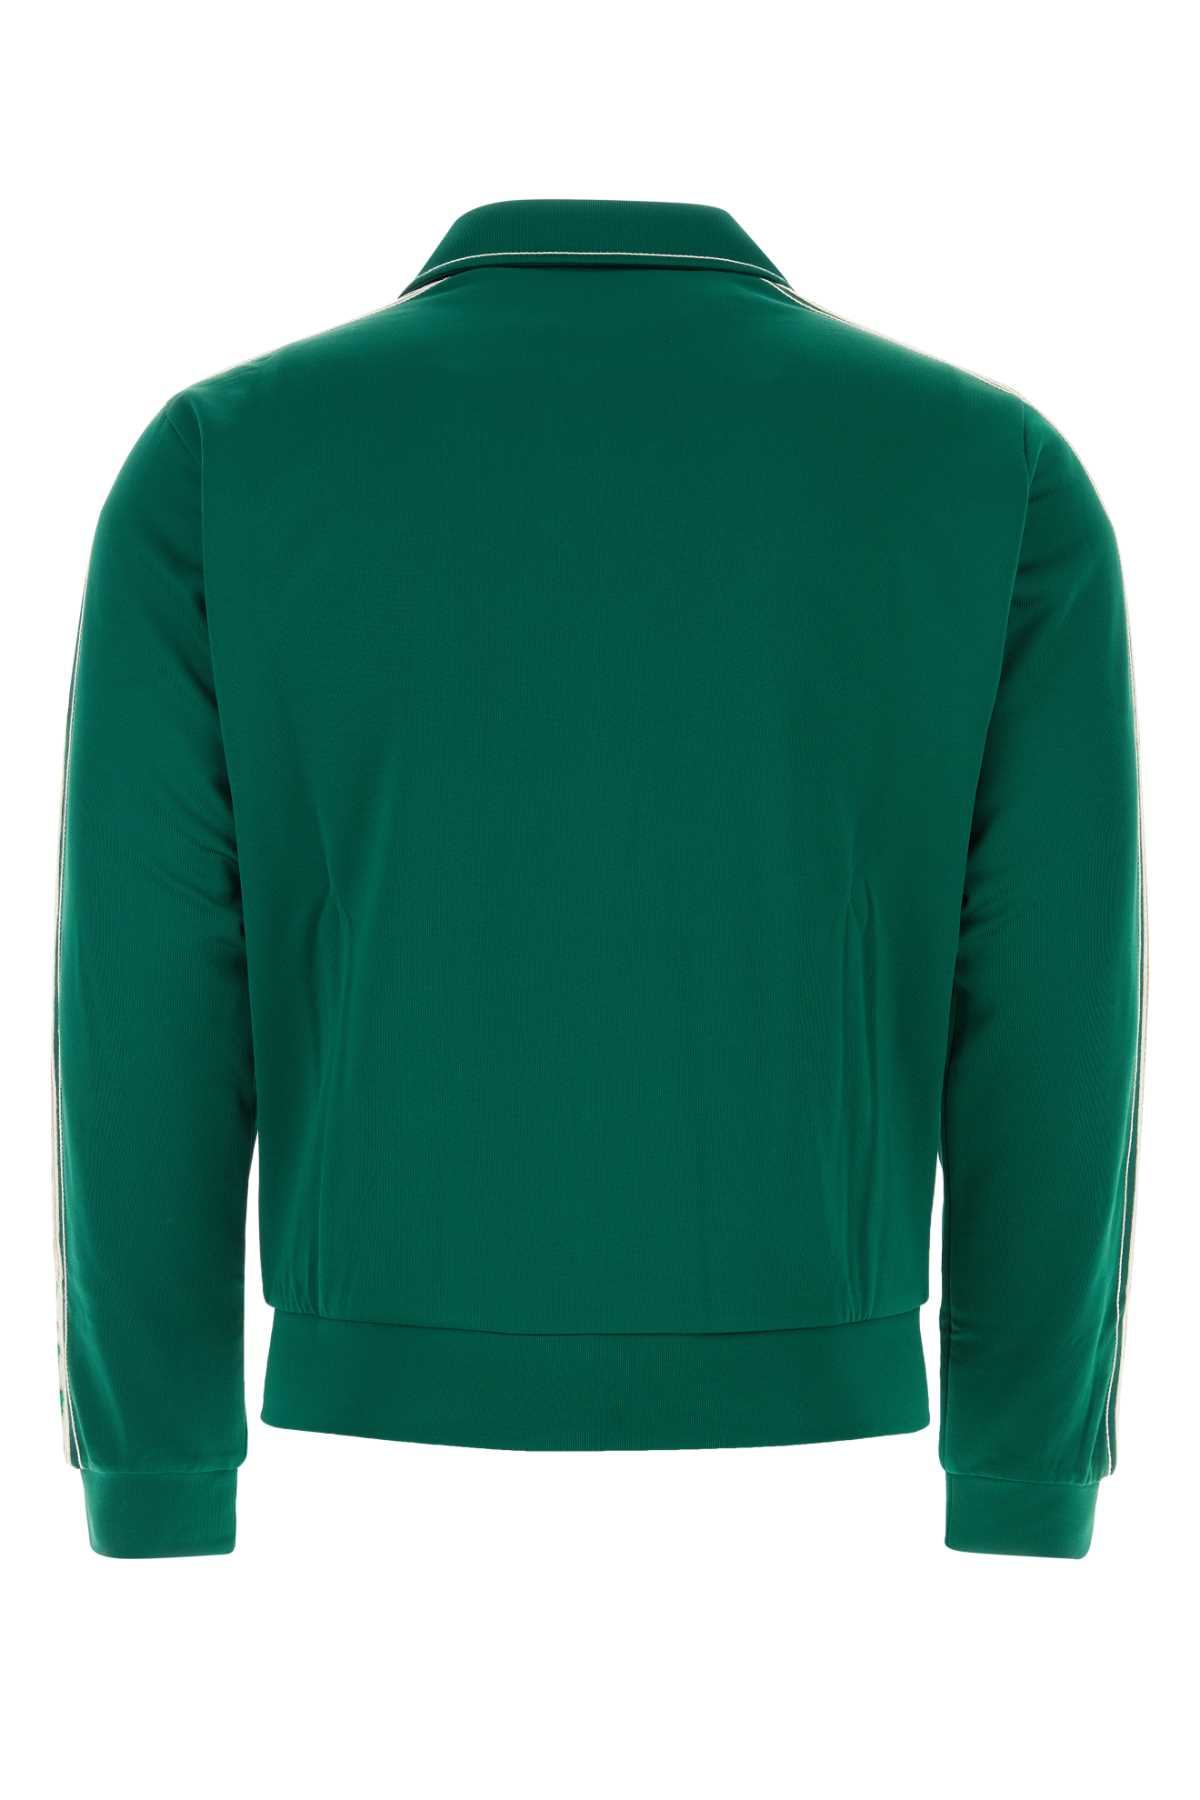 Casablanca Emerald Green Polyester Blend Sweatshirt